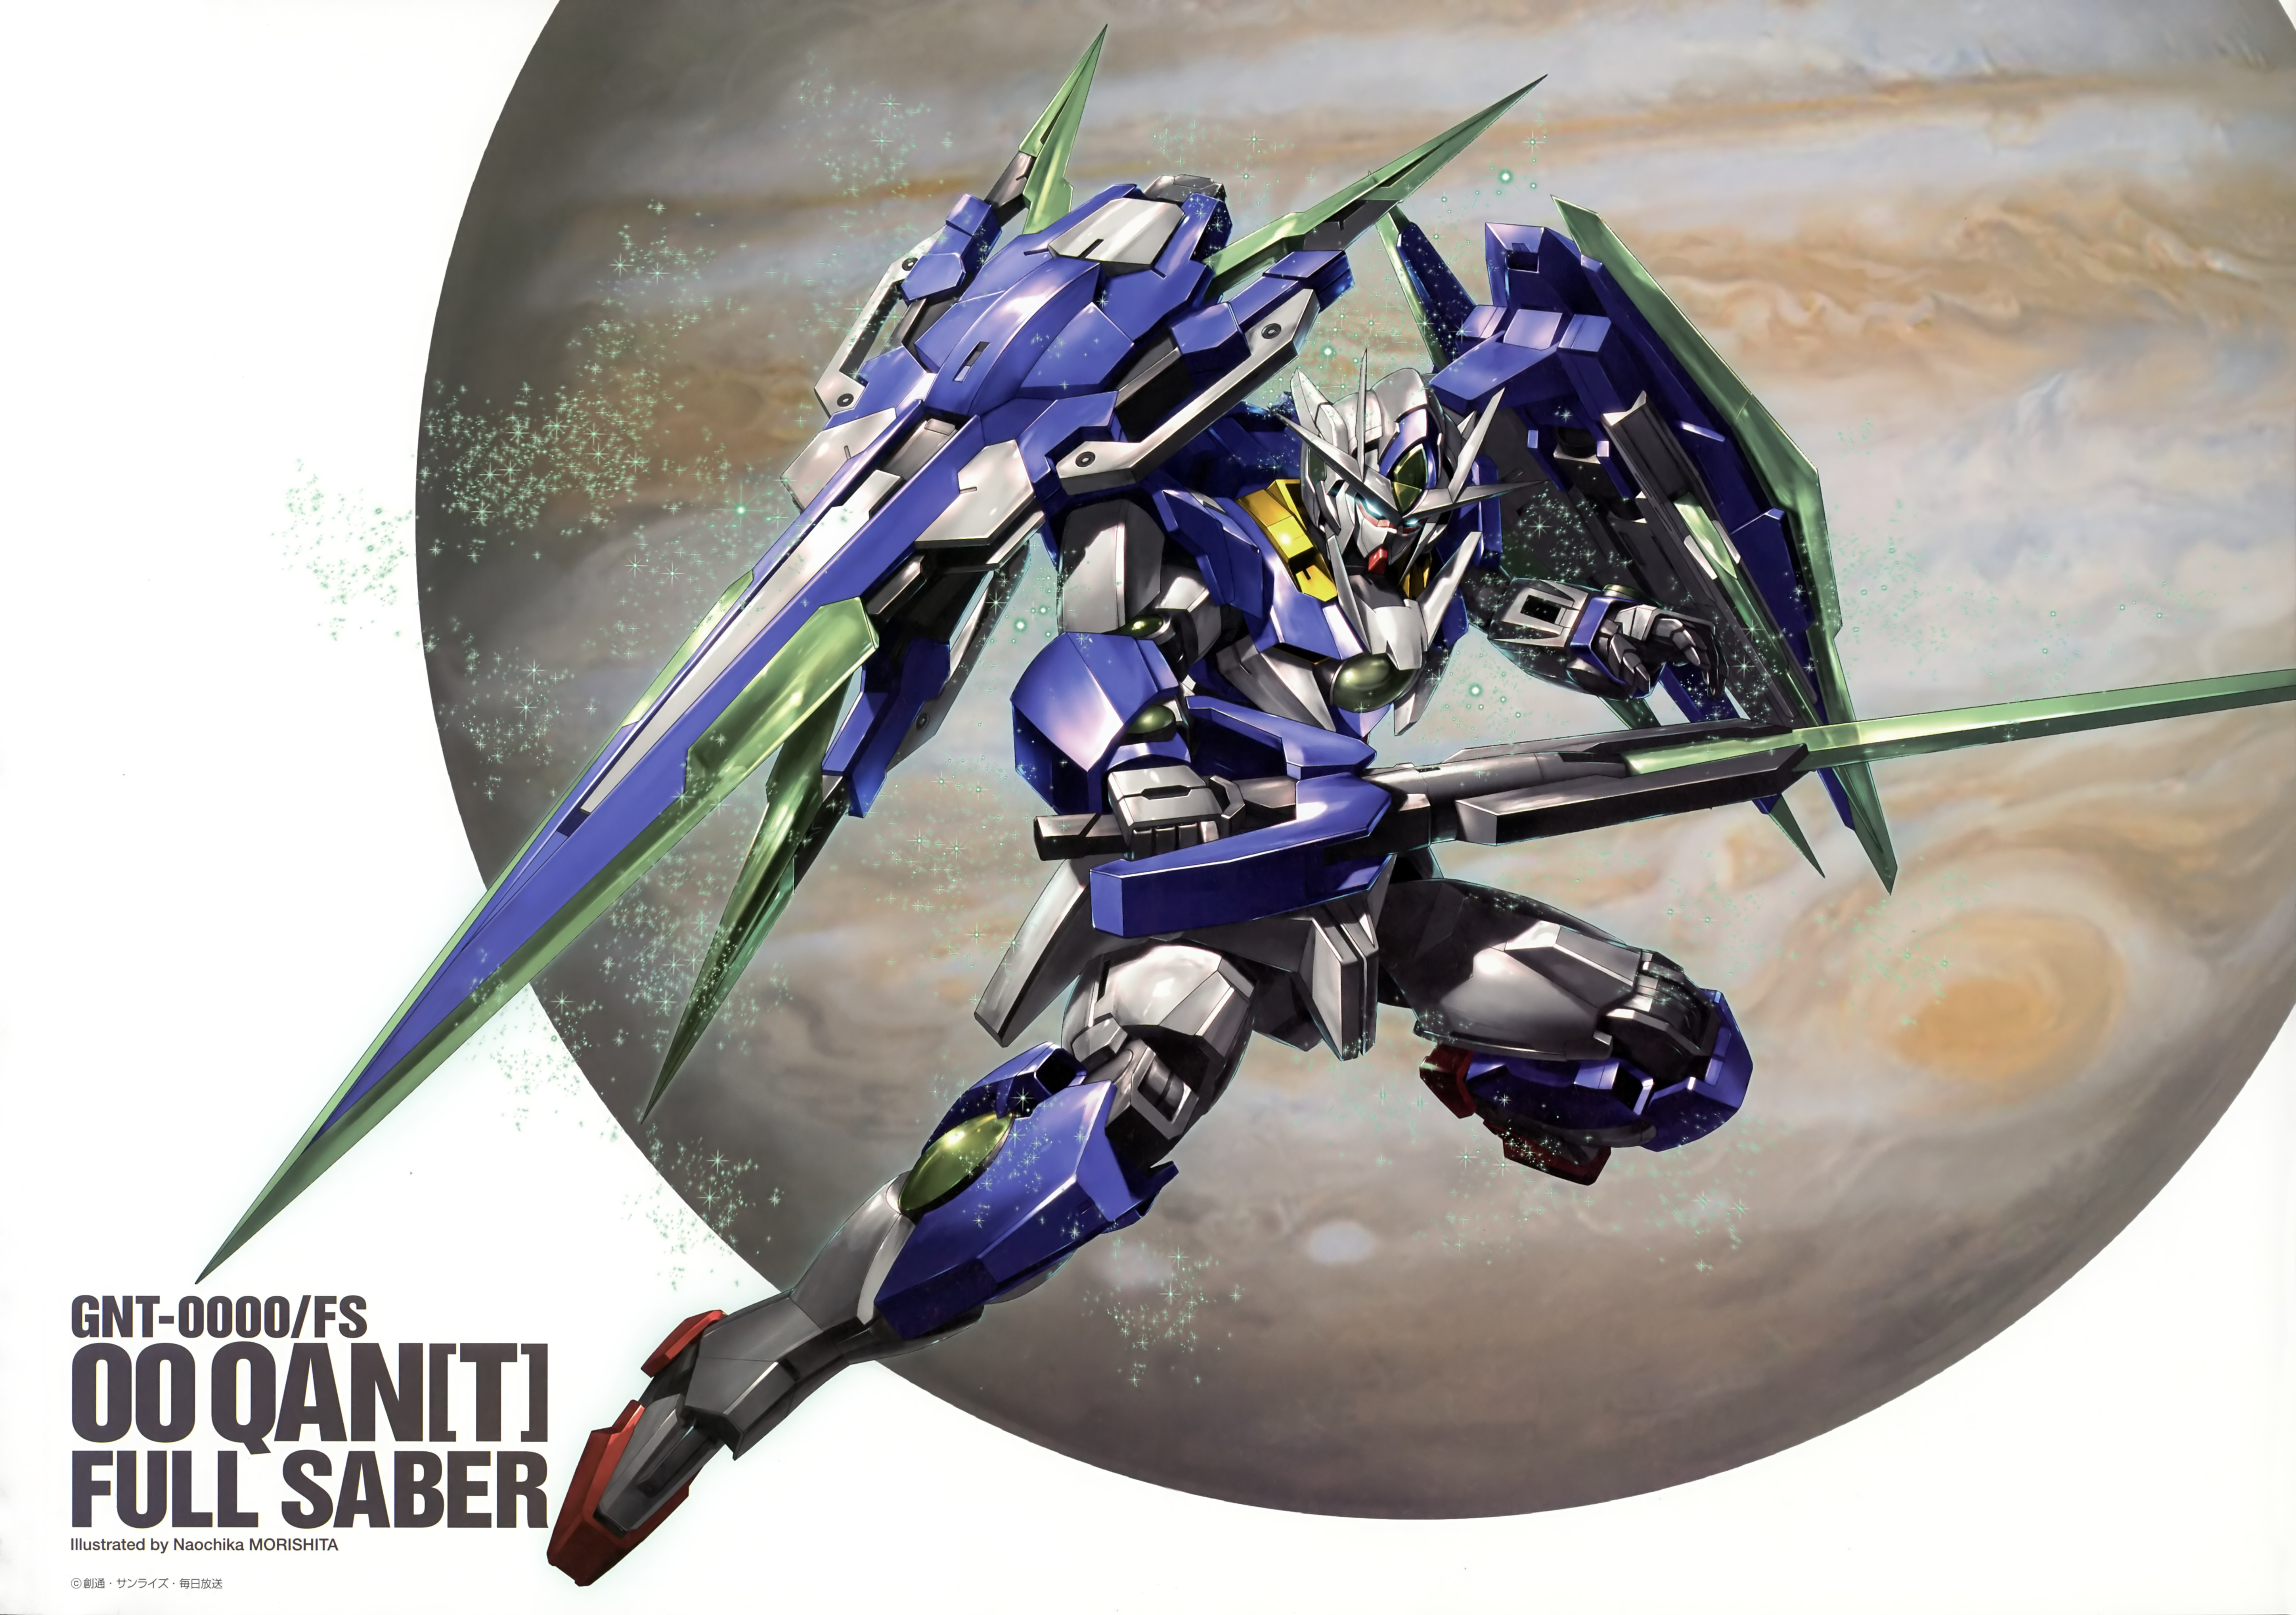 4k Anime Mobile Suit Gundam Wallpaper Background Image